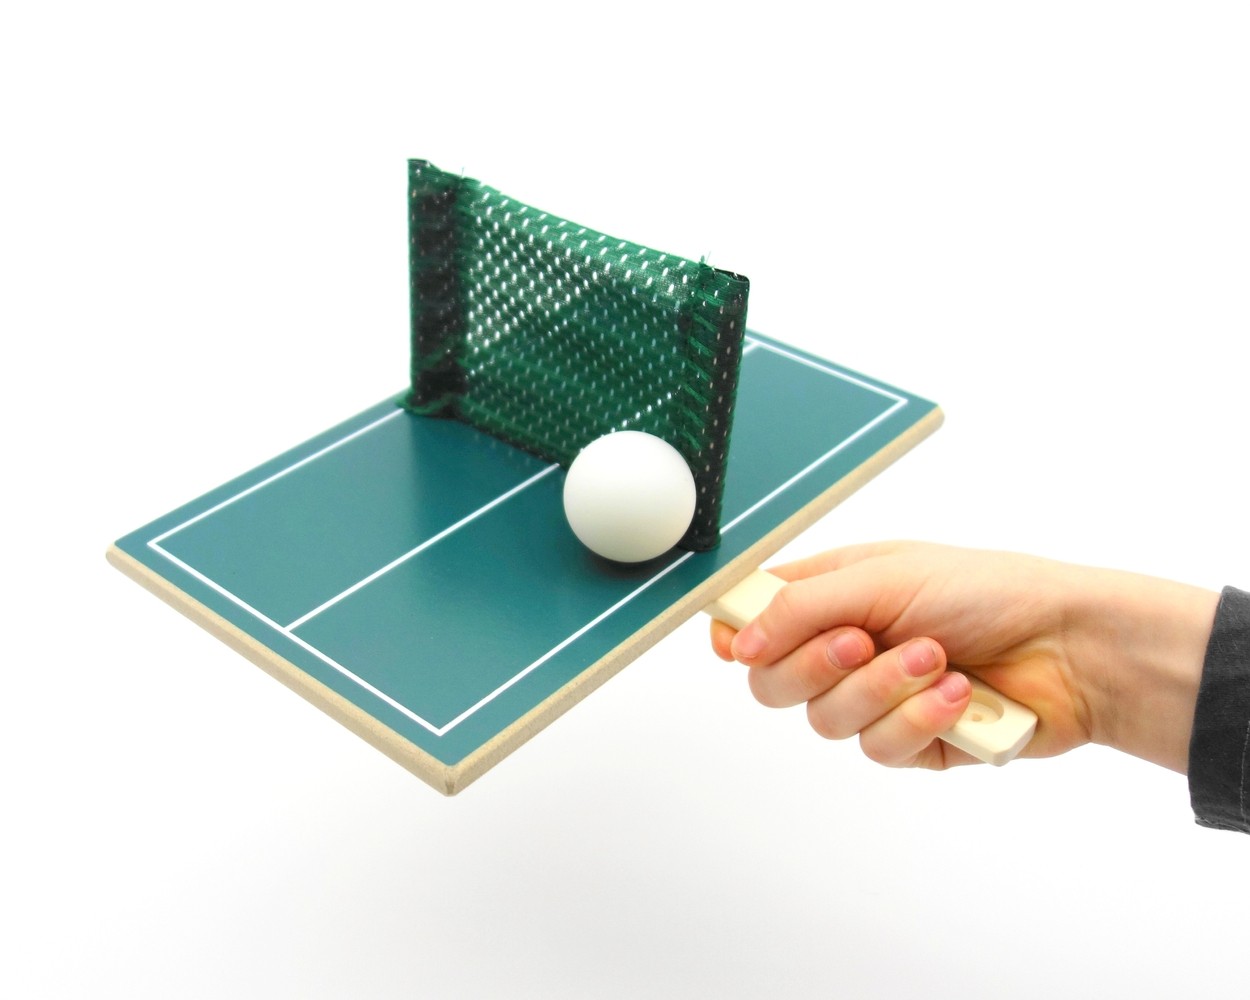 Le ping-pong solo vert